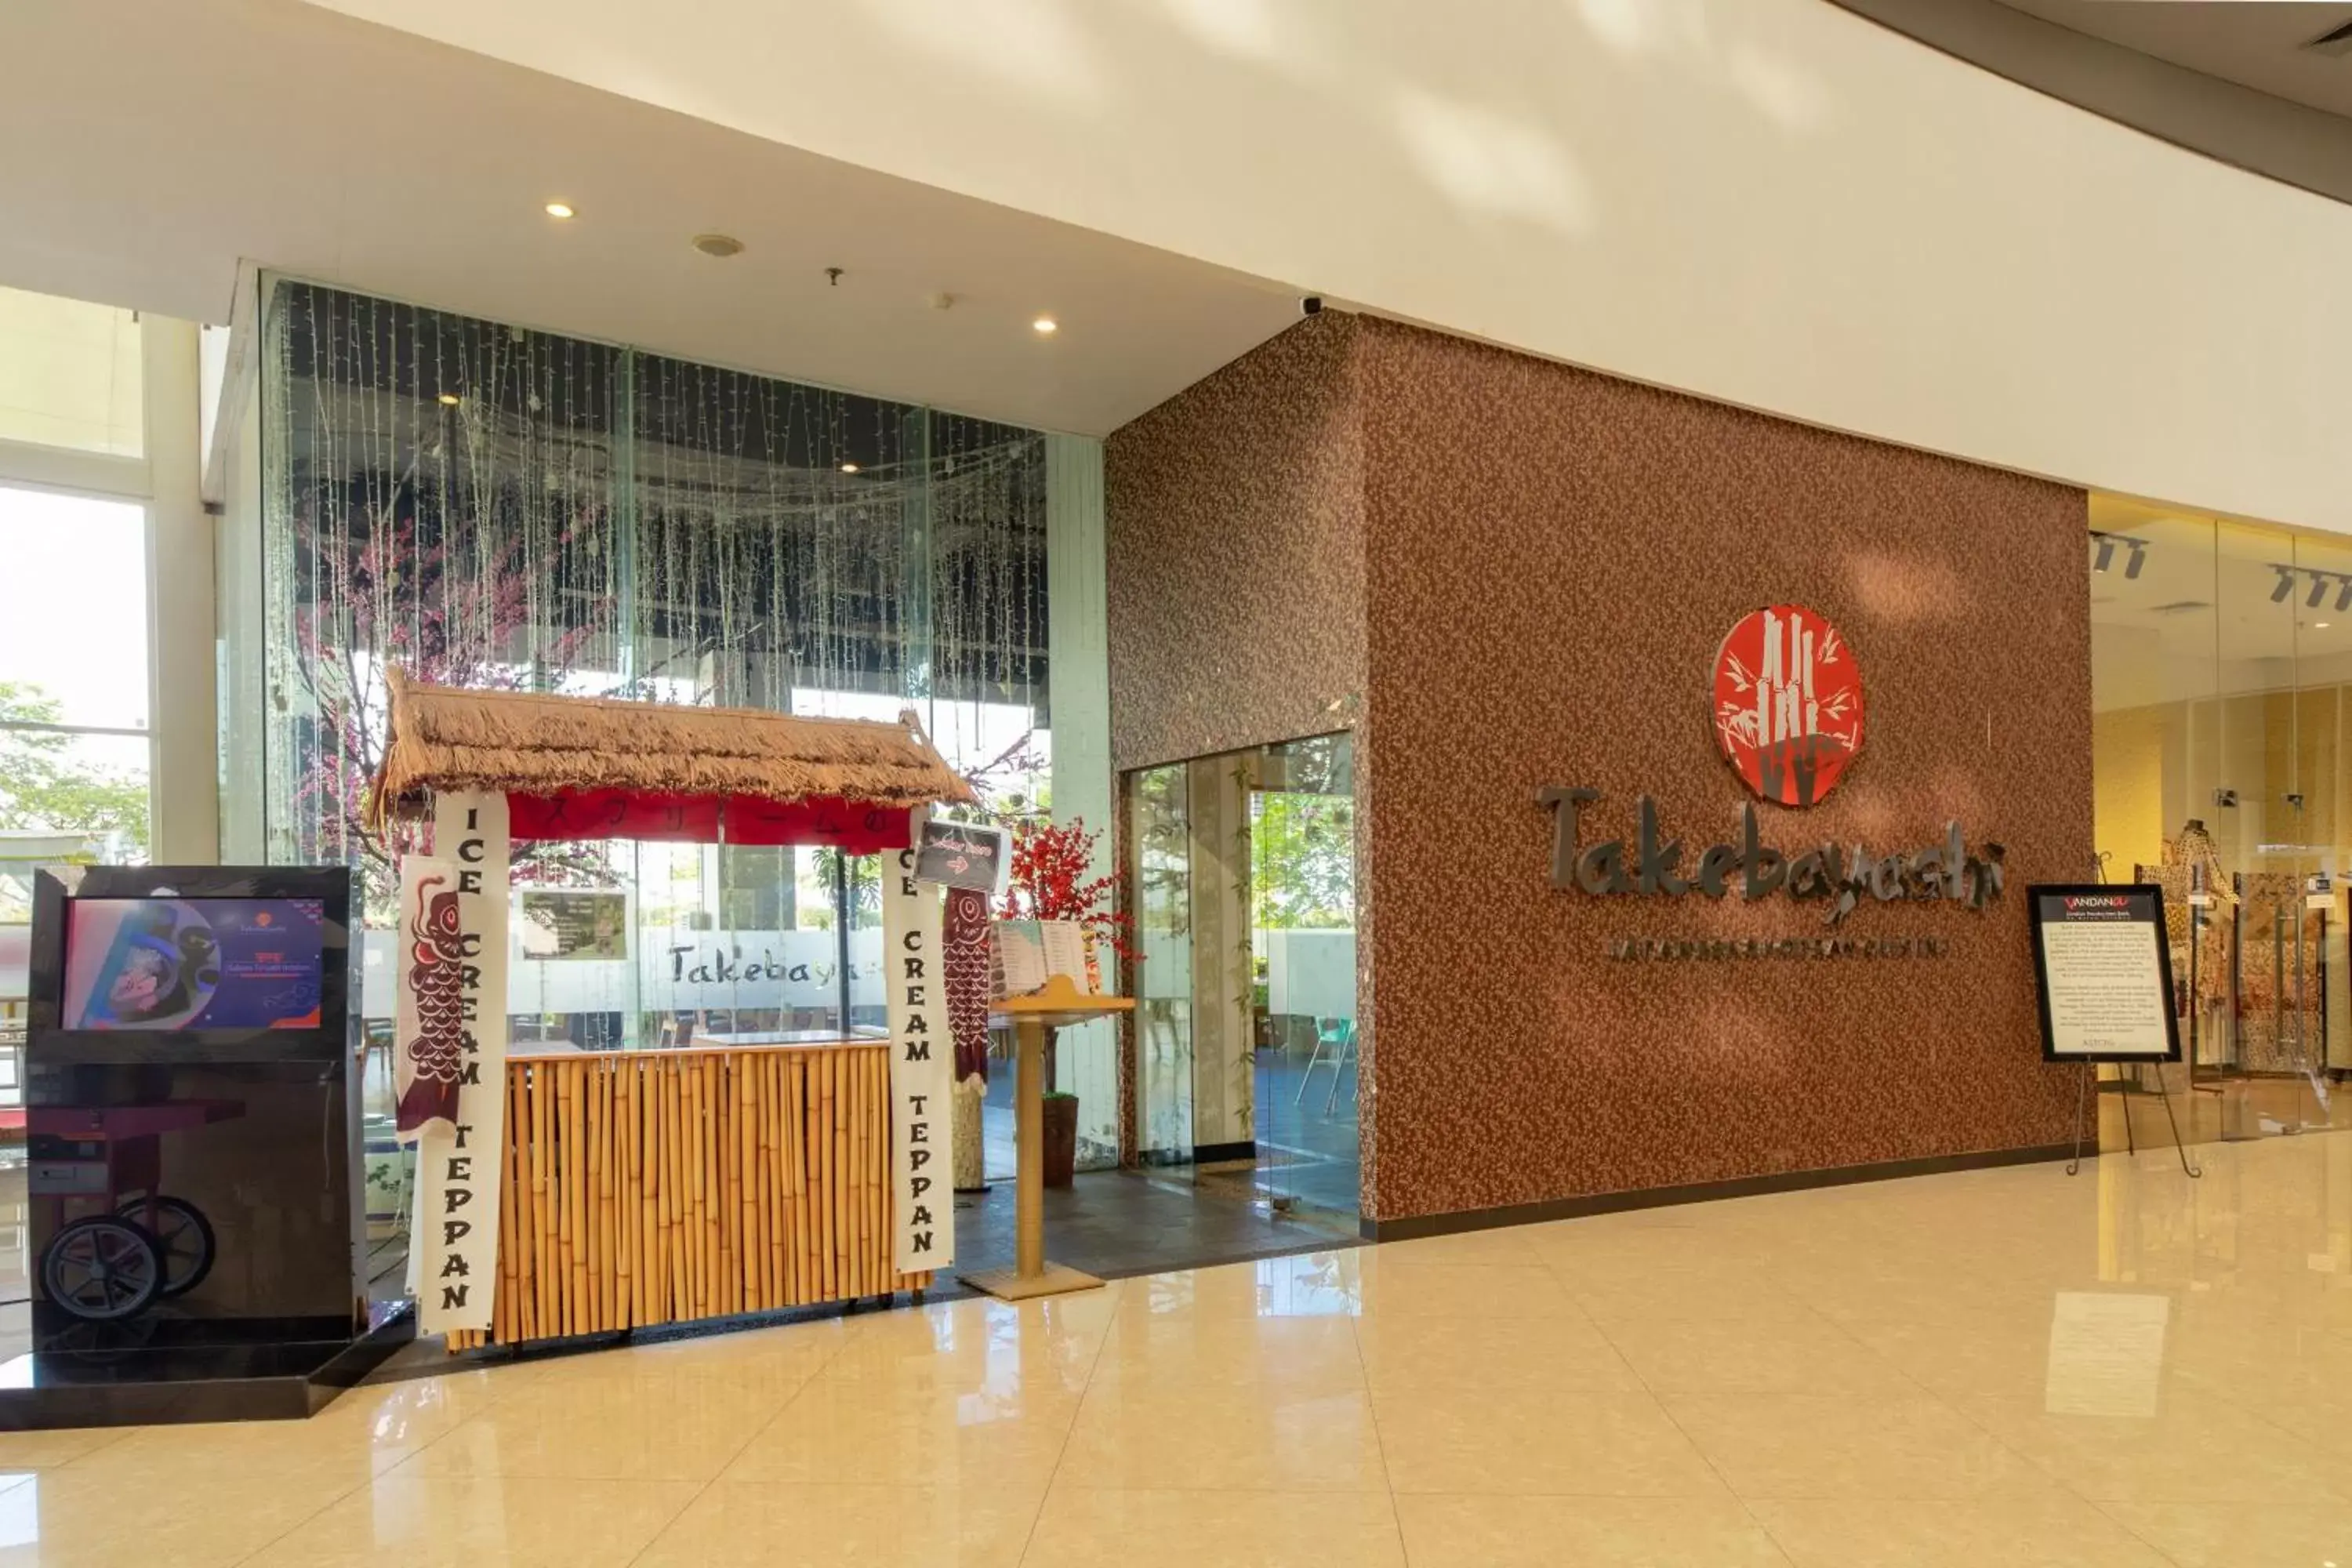 Lobby or reception in ASTON Cirebon Hotel and Convention Center